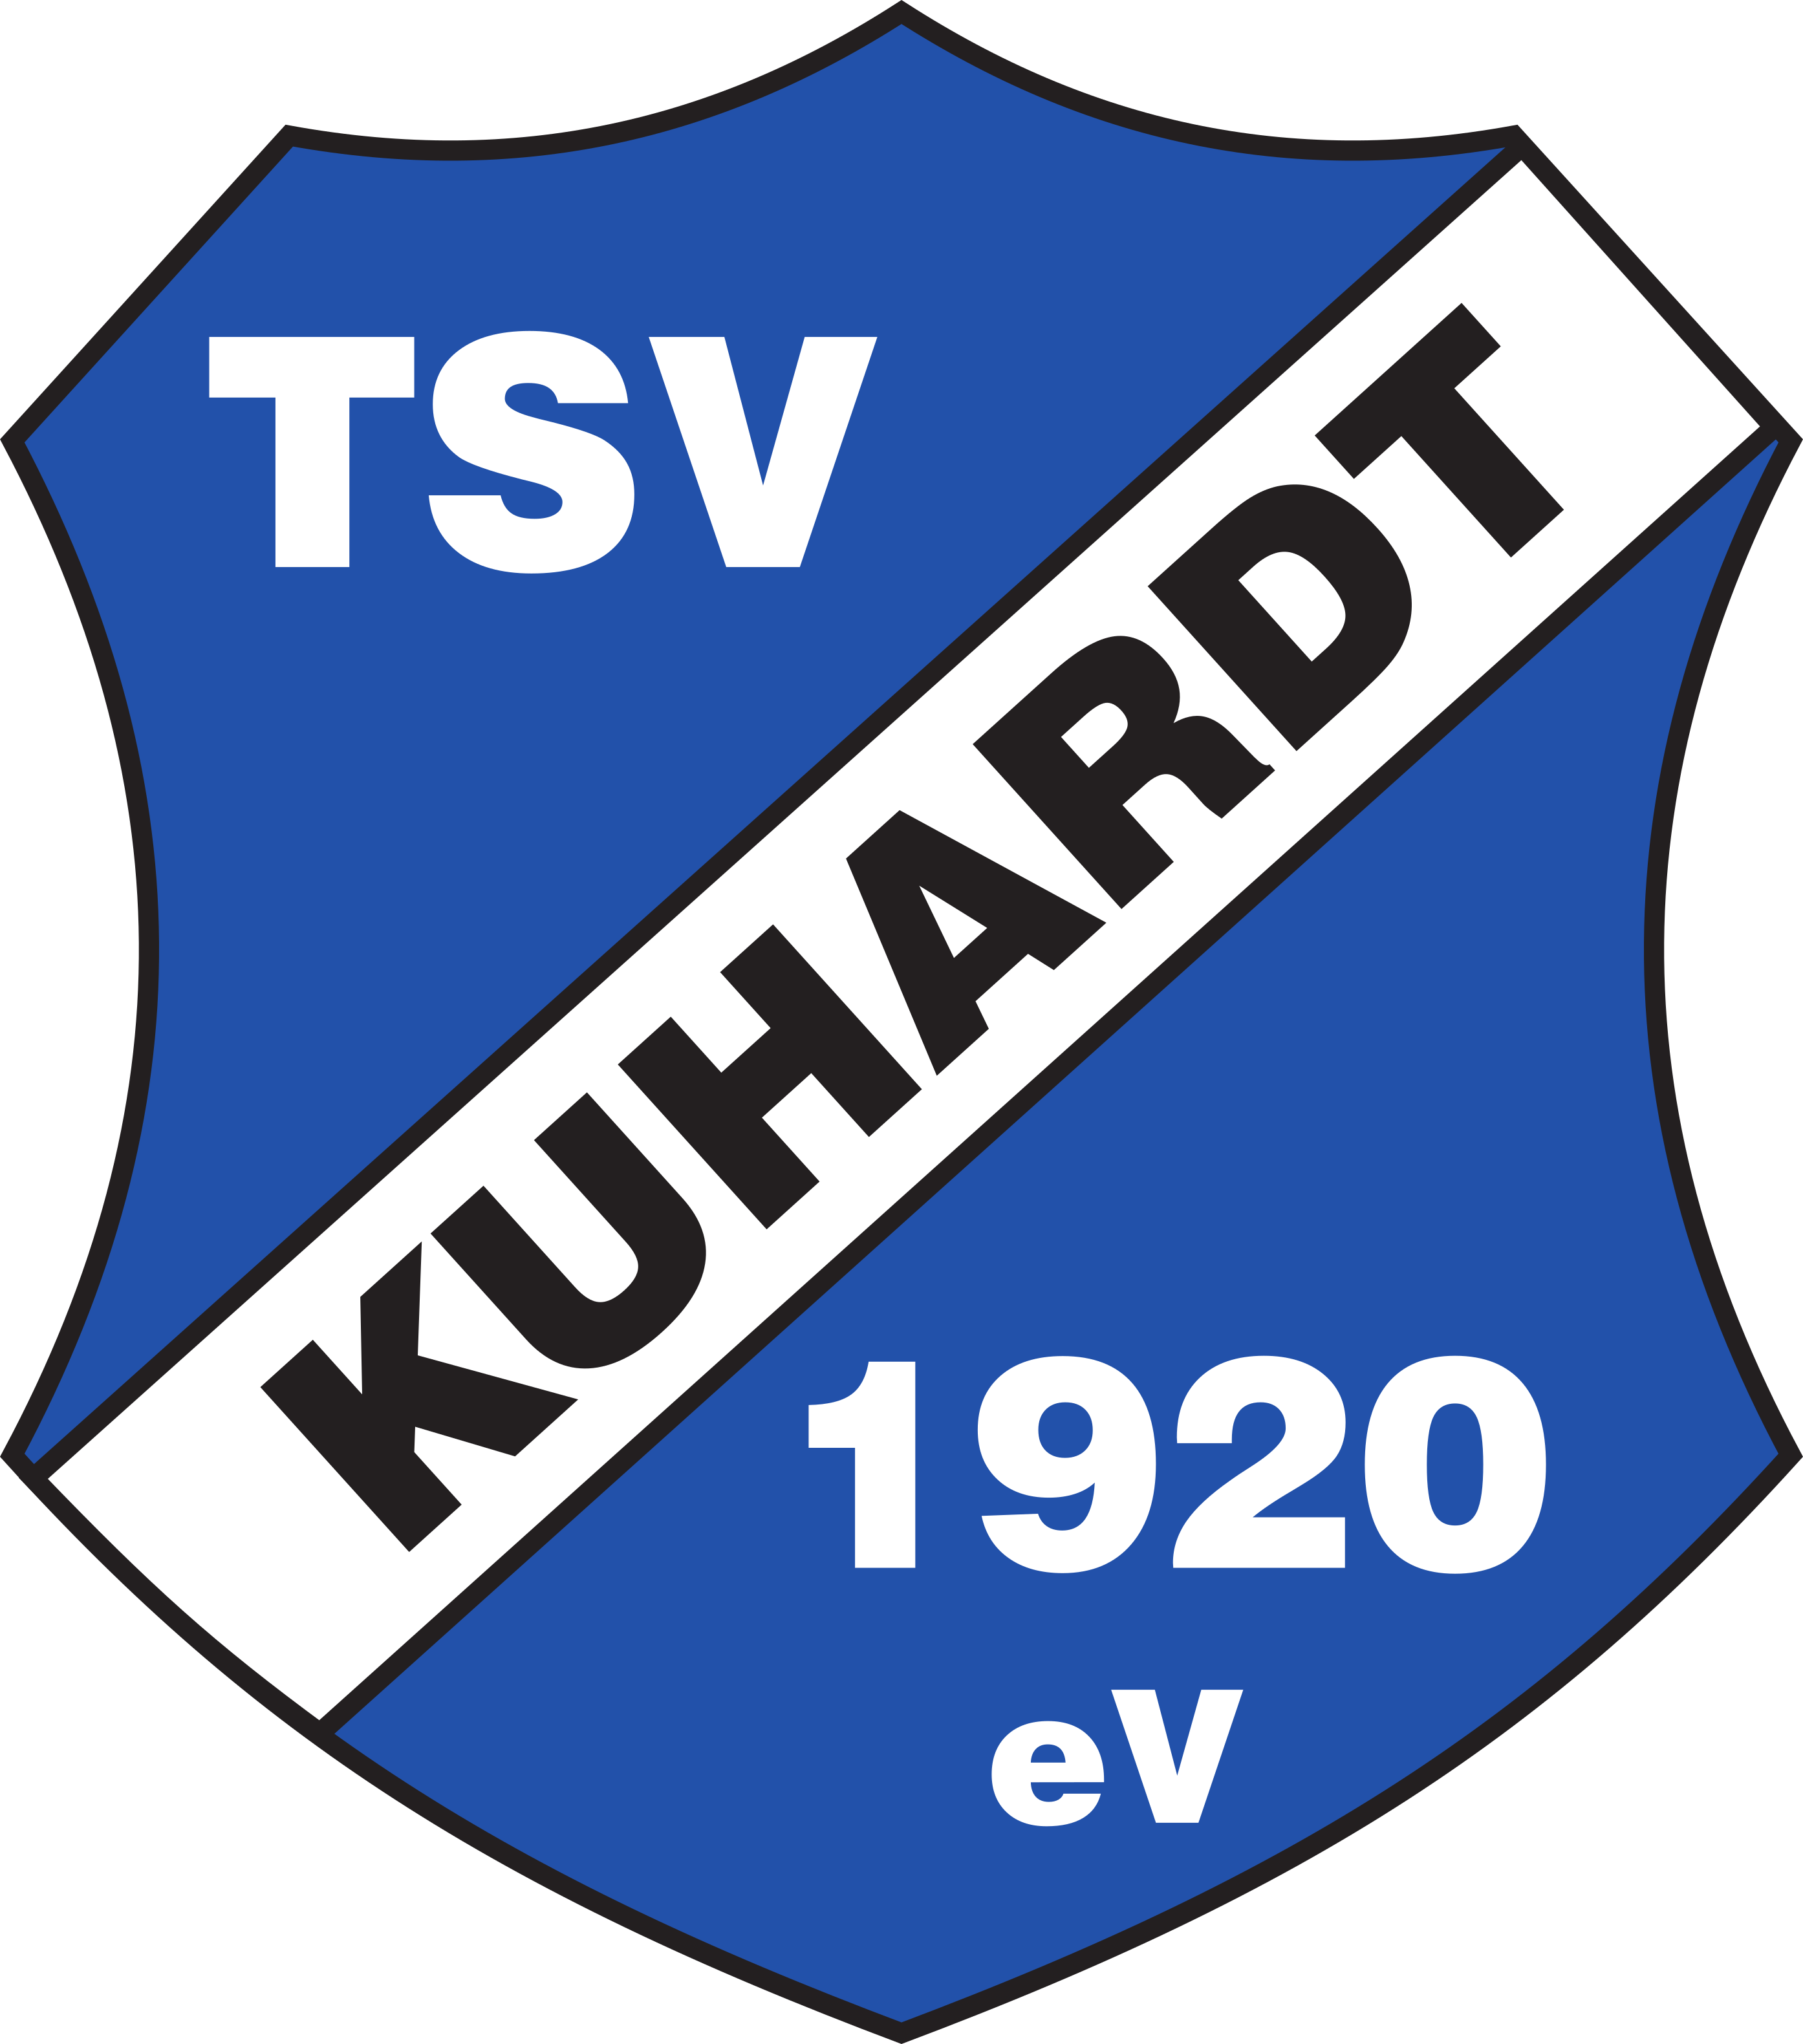 TSV Kuhardt